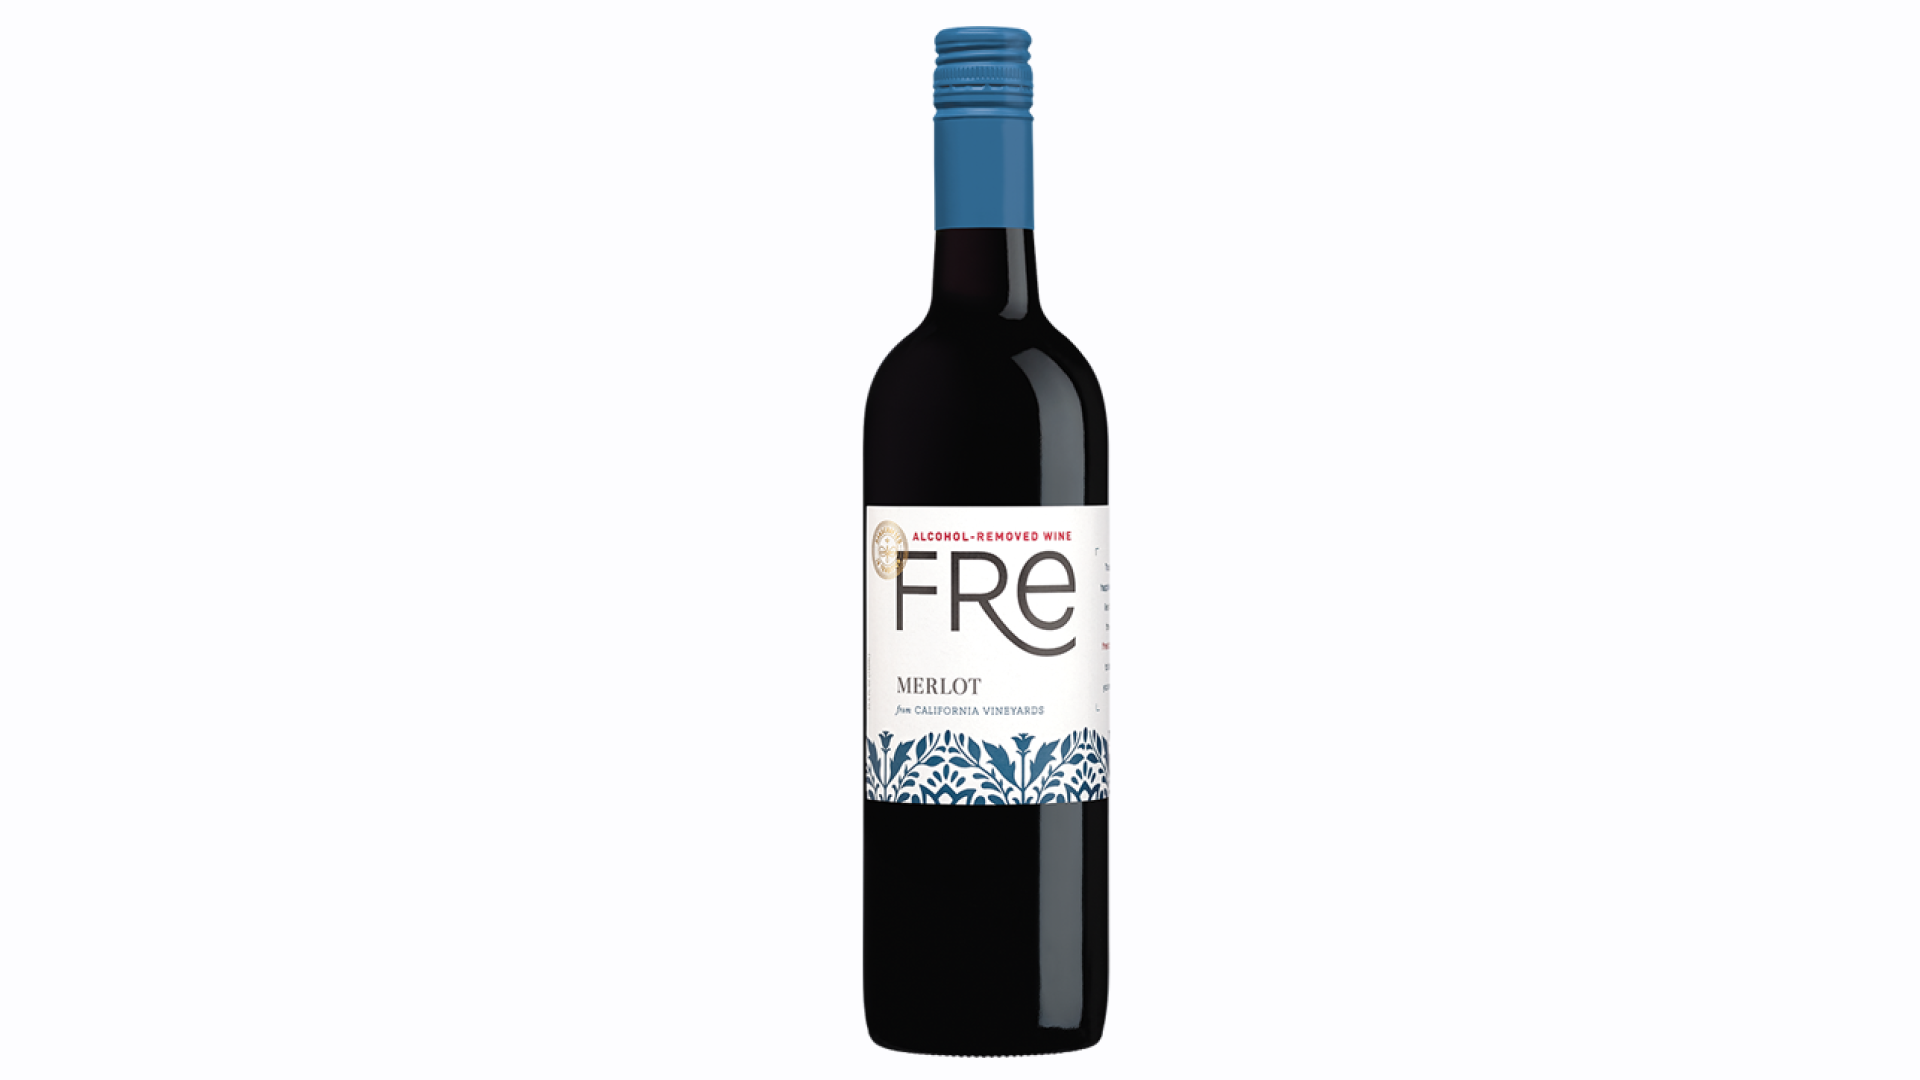 A bottle of non-alcoholic Fre Merlot wine